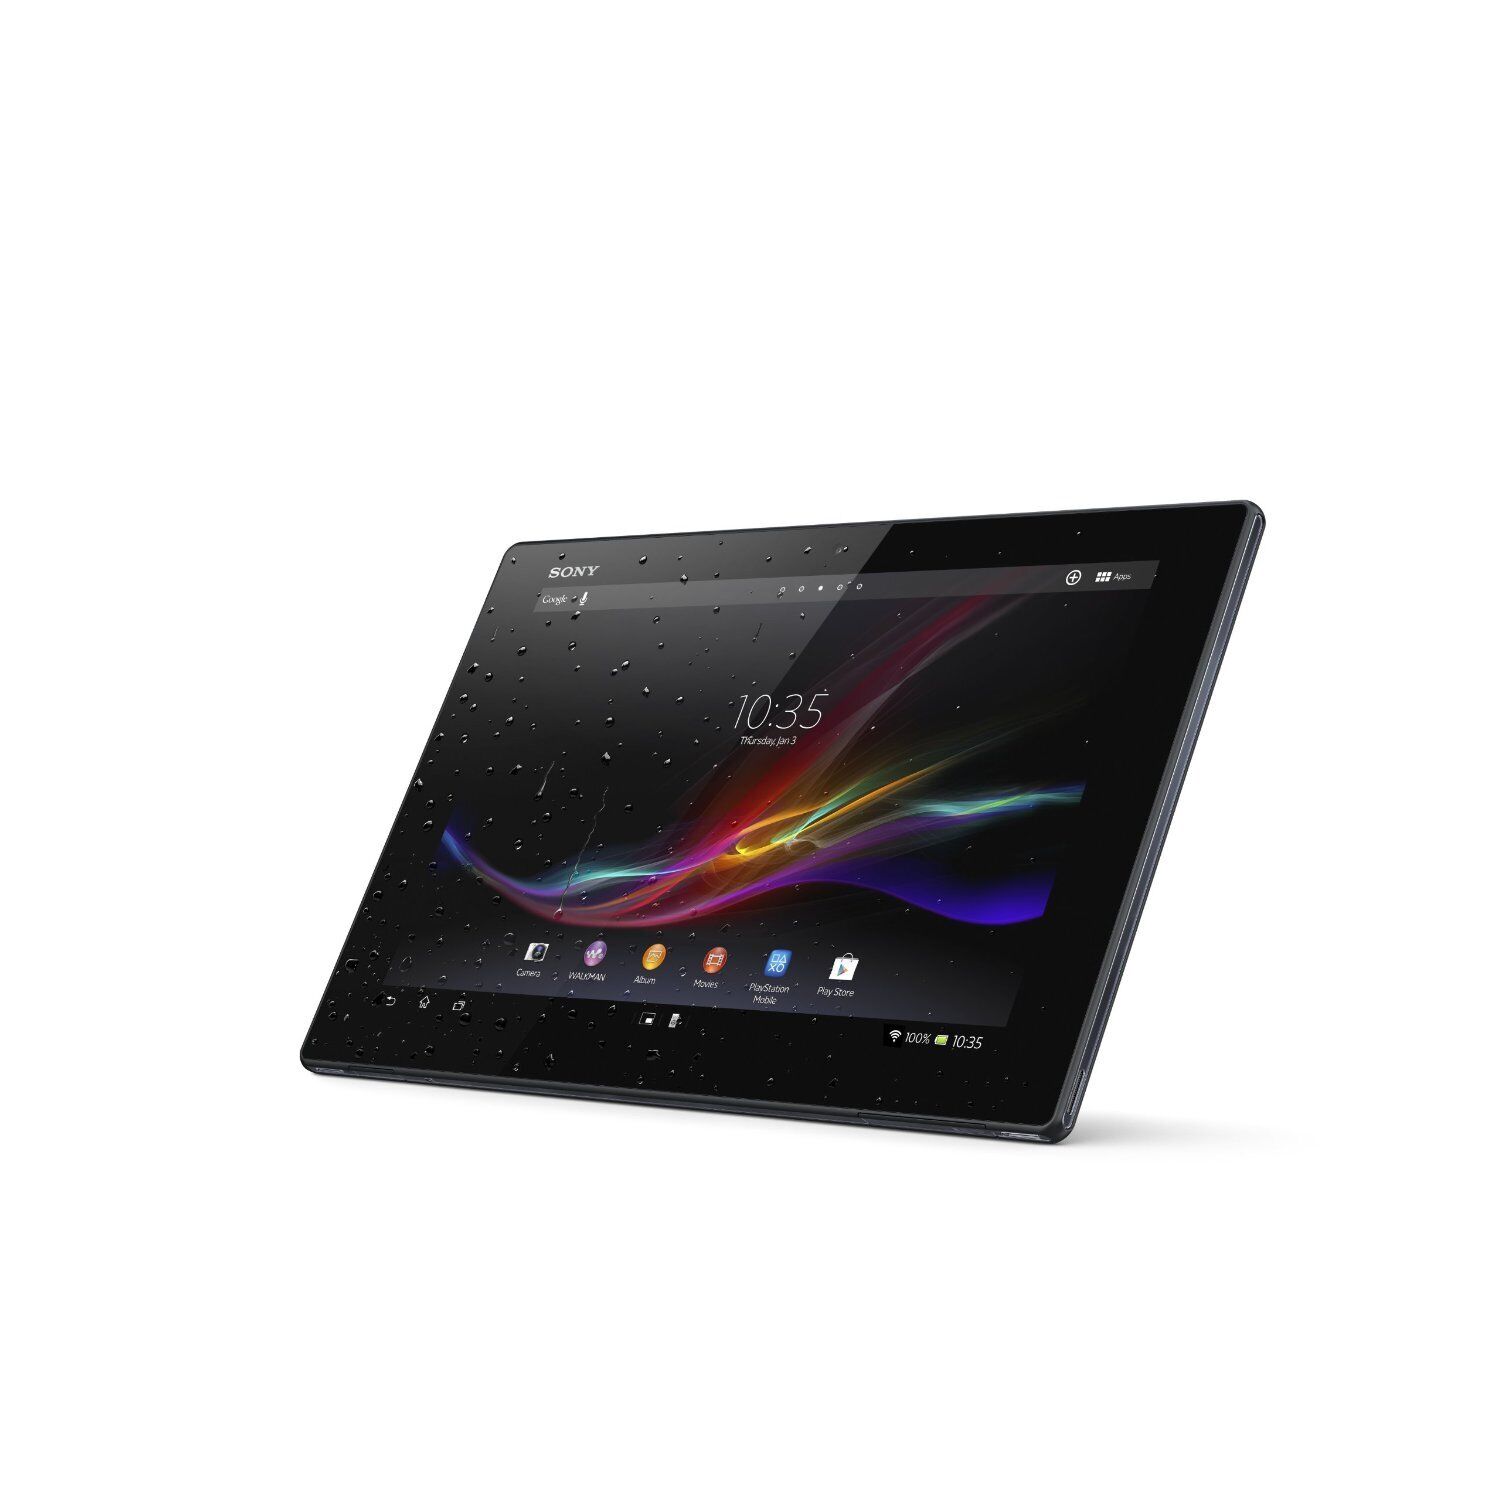 Sony Xperia Tablet Z 16GB Wi-Fi 10.1in - Black 195925158230 | eBay